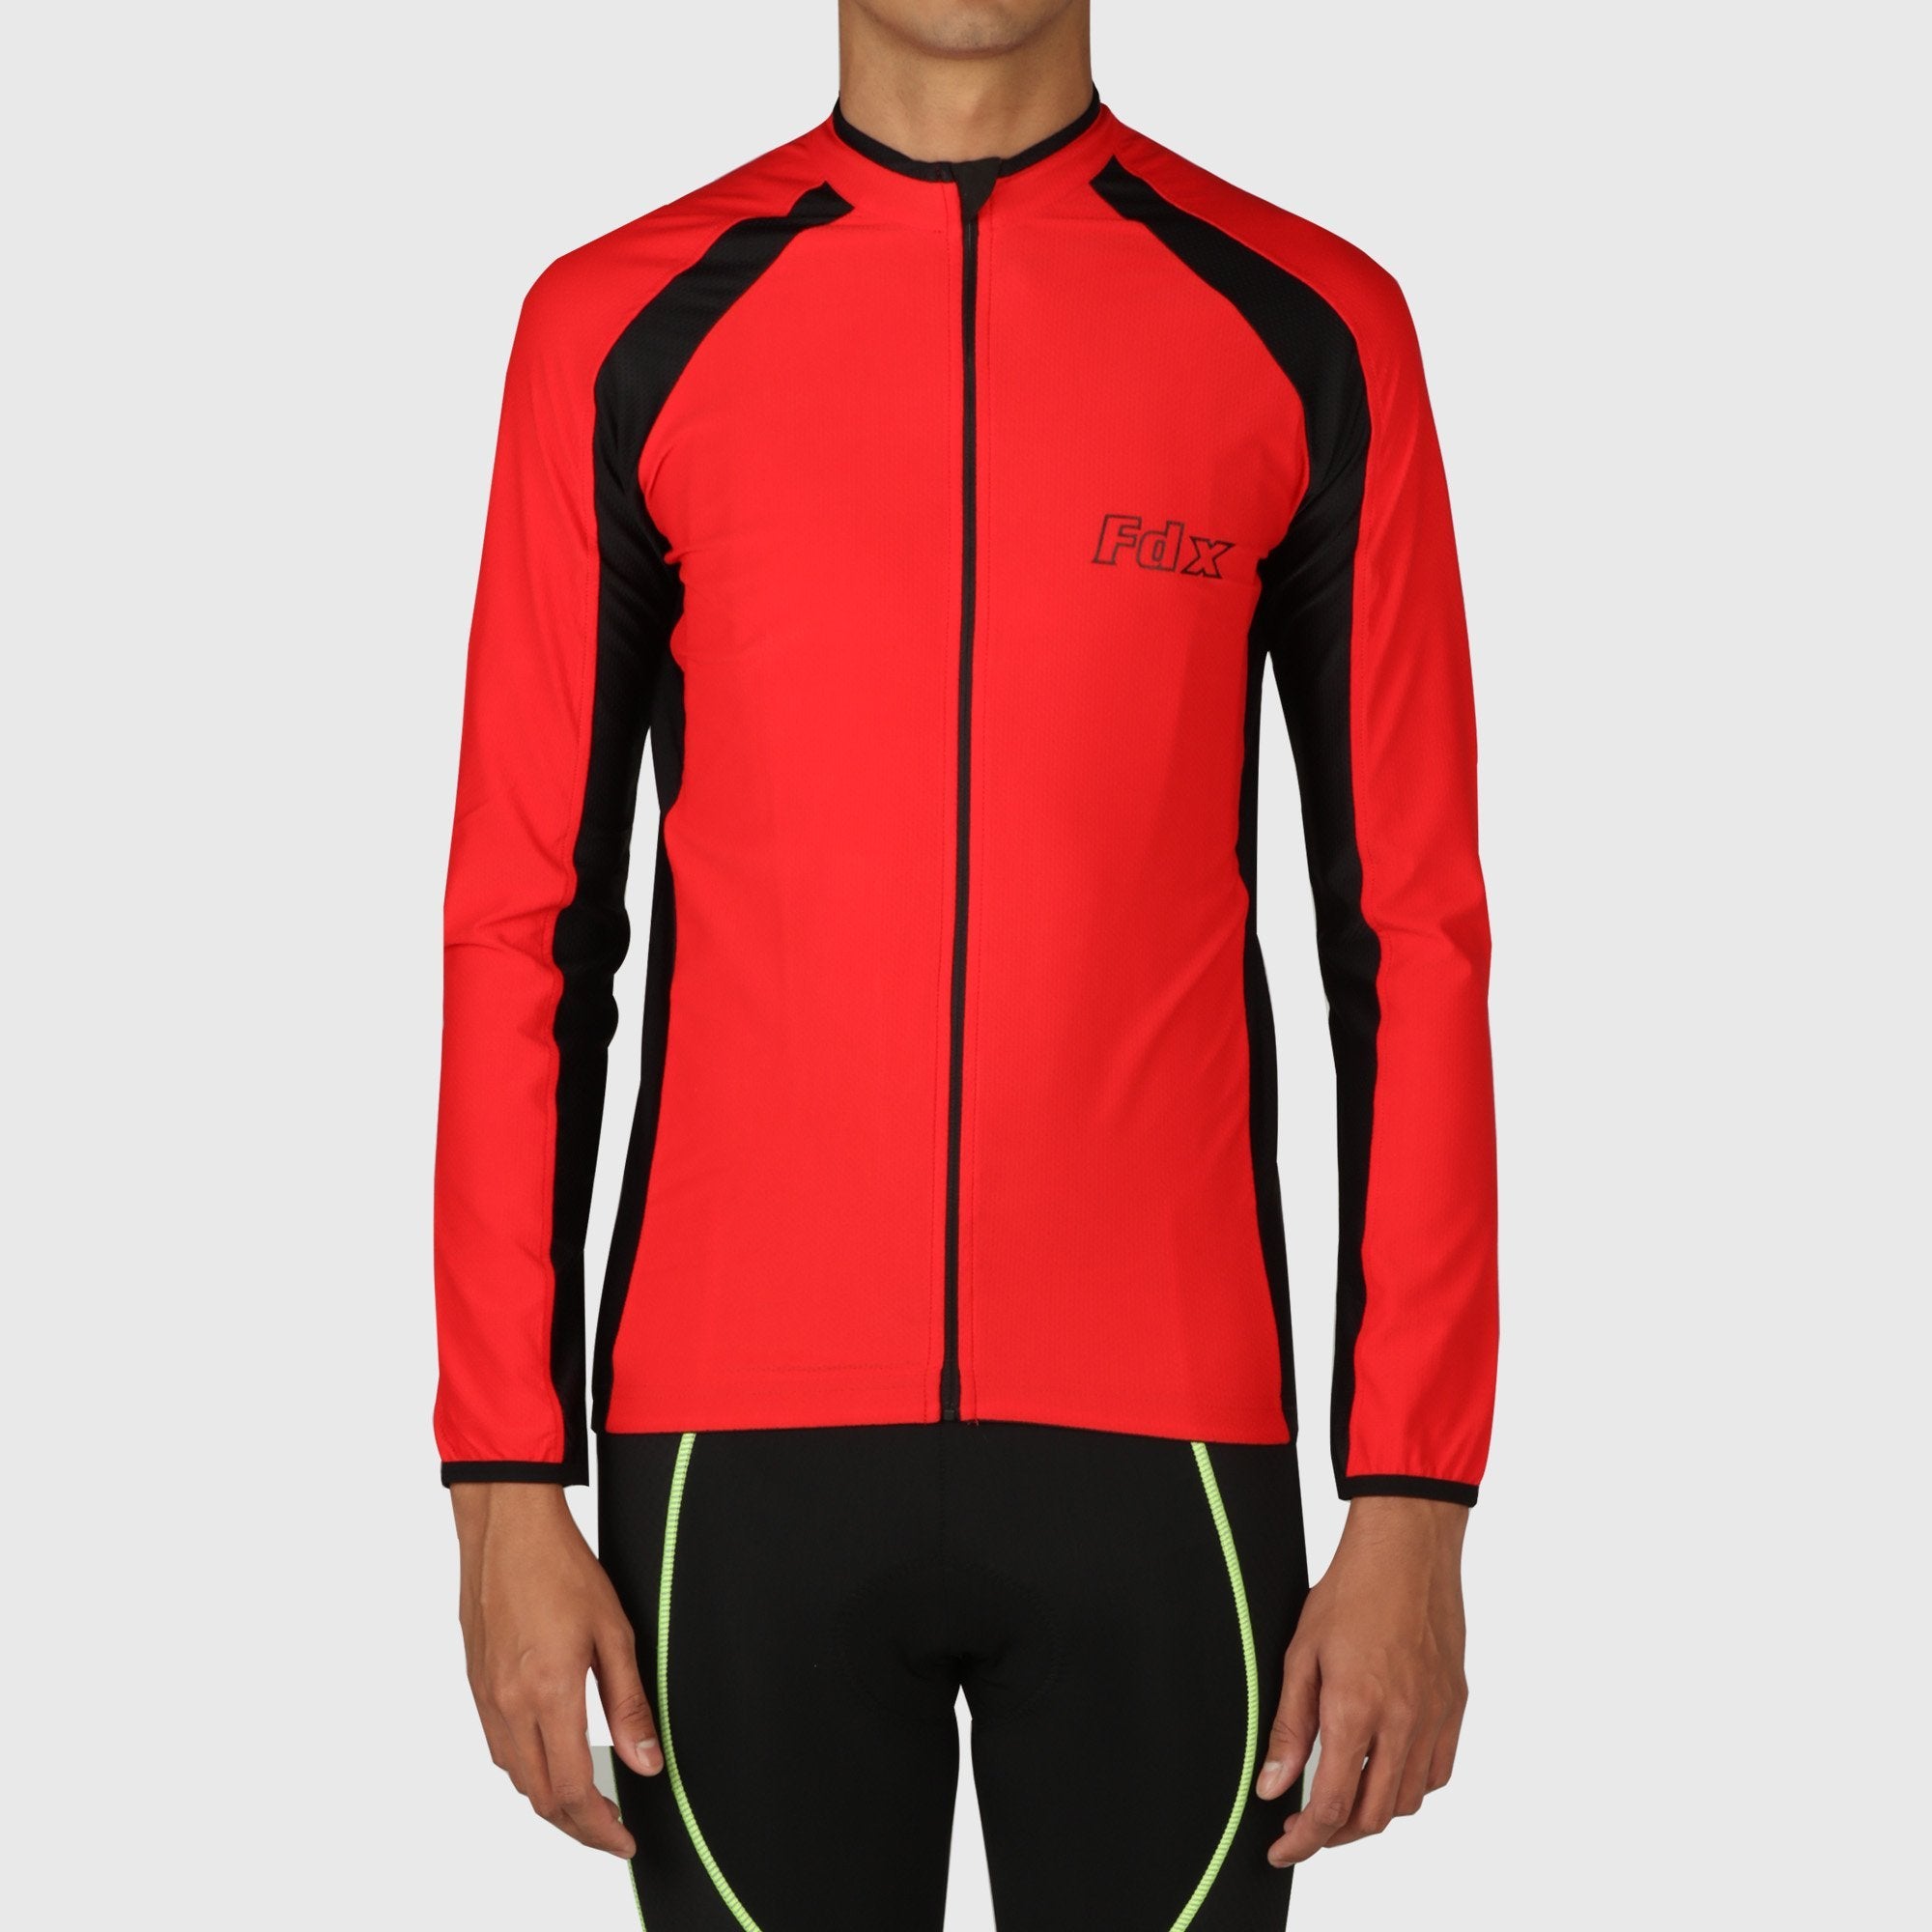 Fdx Black & Red best Men's Long Sleeve Cycling Jersey for Winter Roubaix Thermal Fleece Road Bike Wear Top Full Zipper, Pockets & Reflective Details - Transition